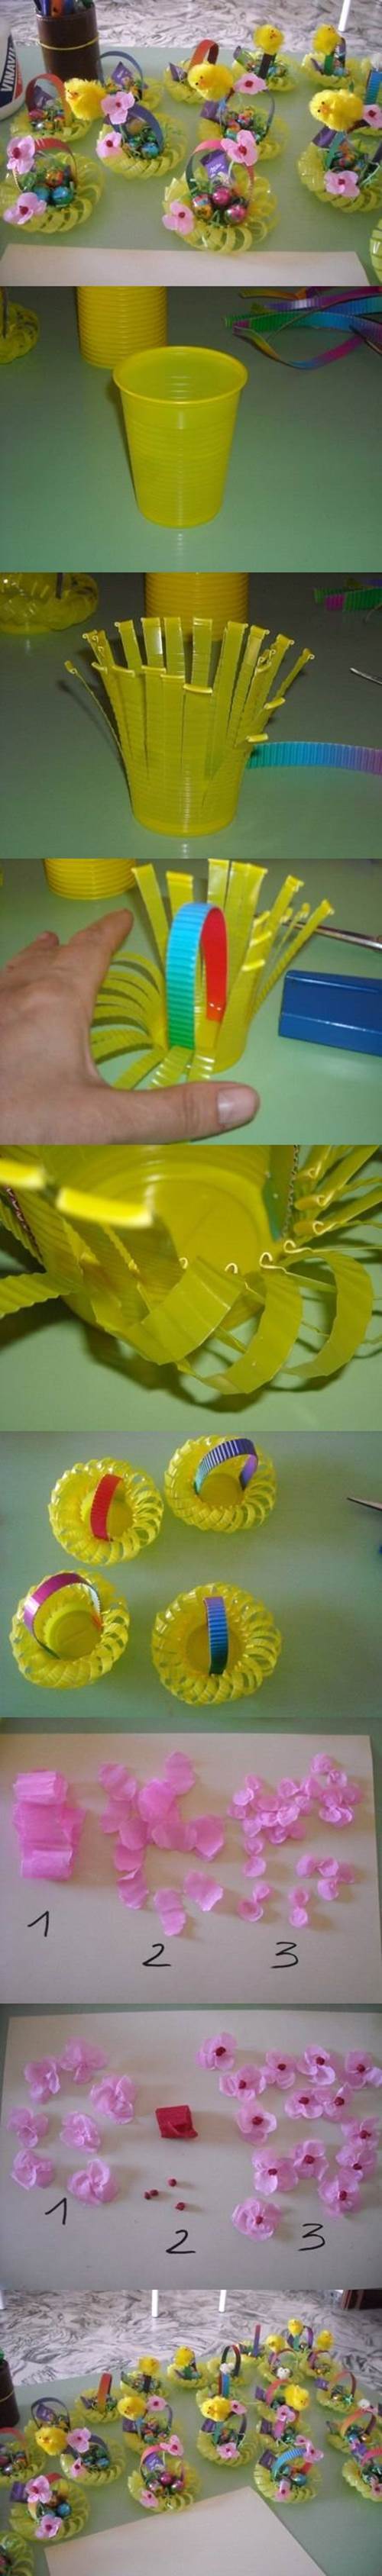 DIY Plastic Cup Easter Basket